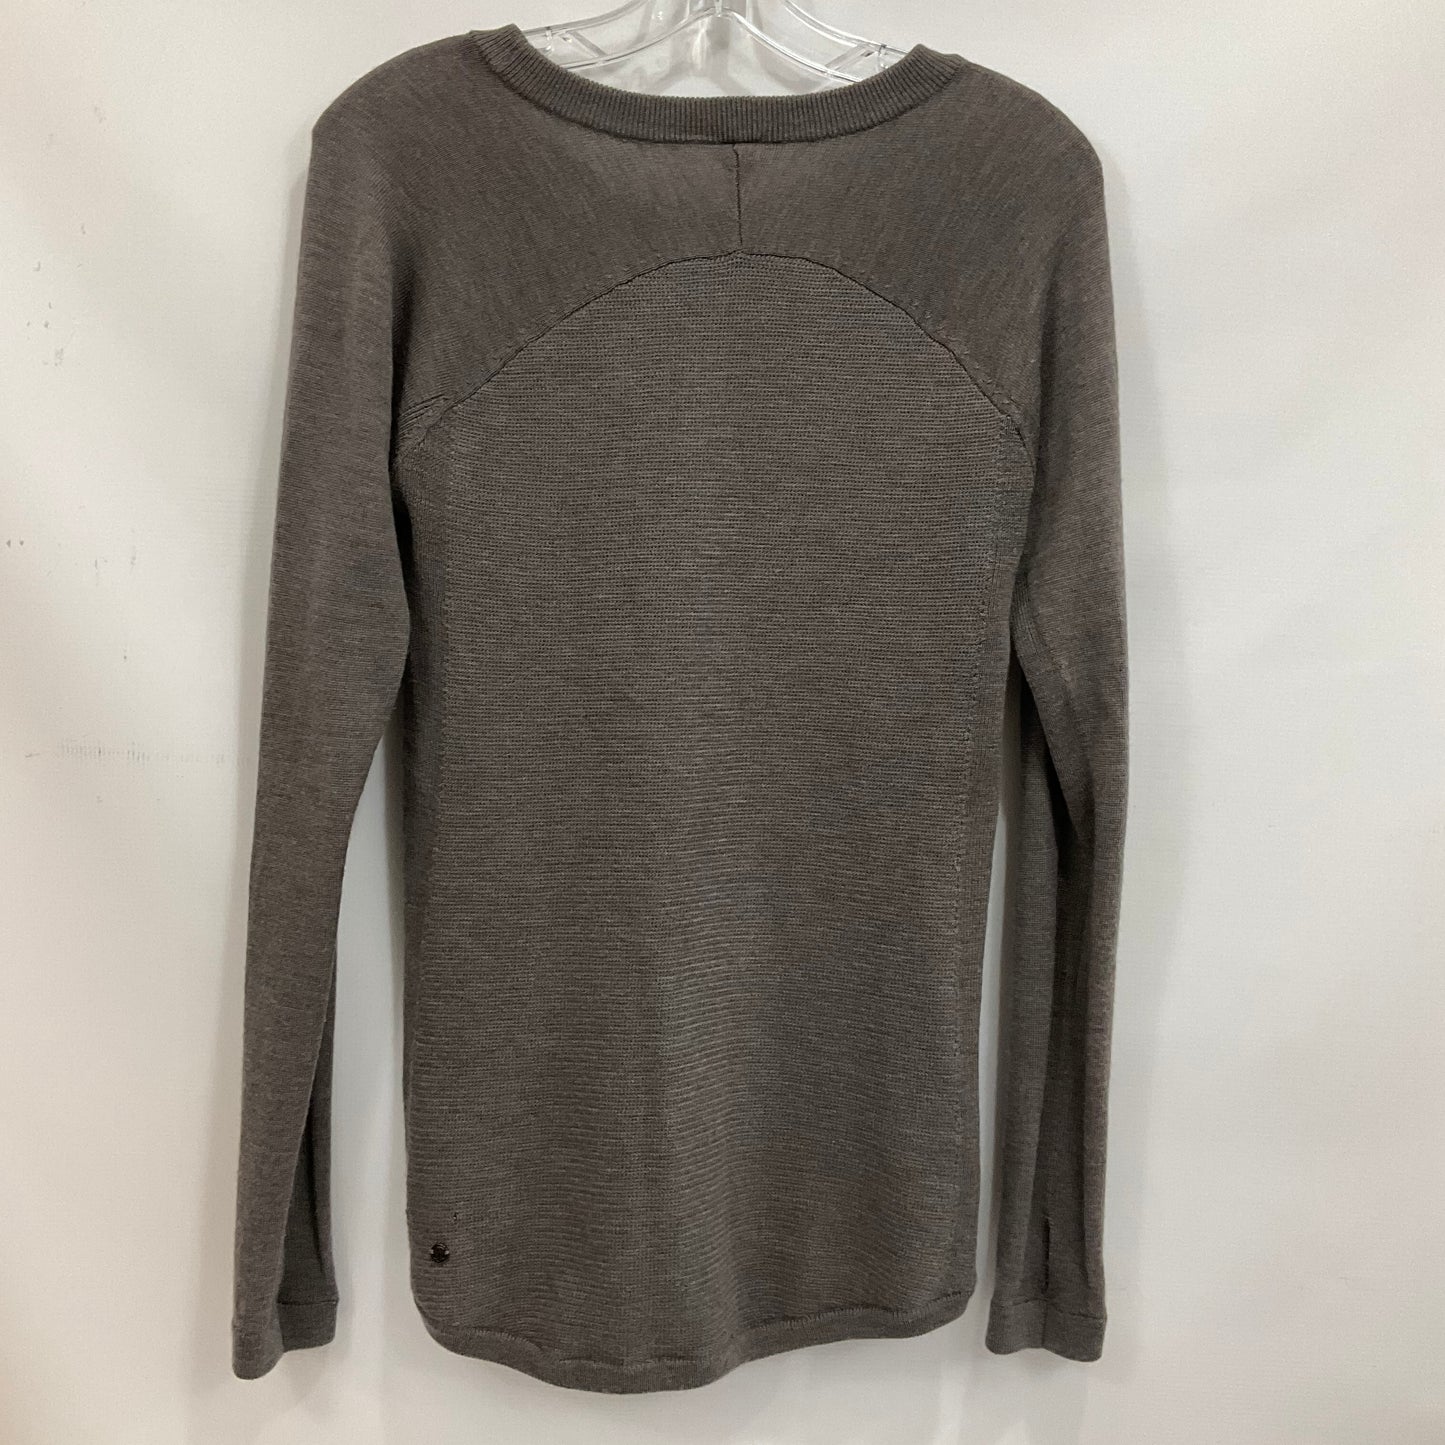 Sweater By Lululemon  Size: 6